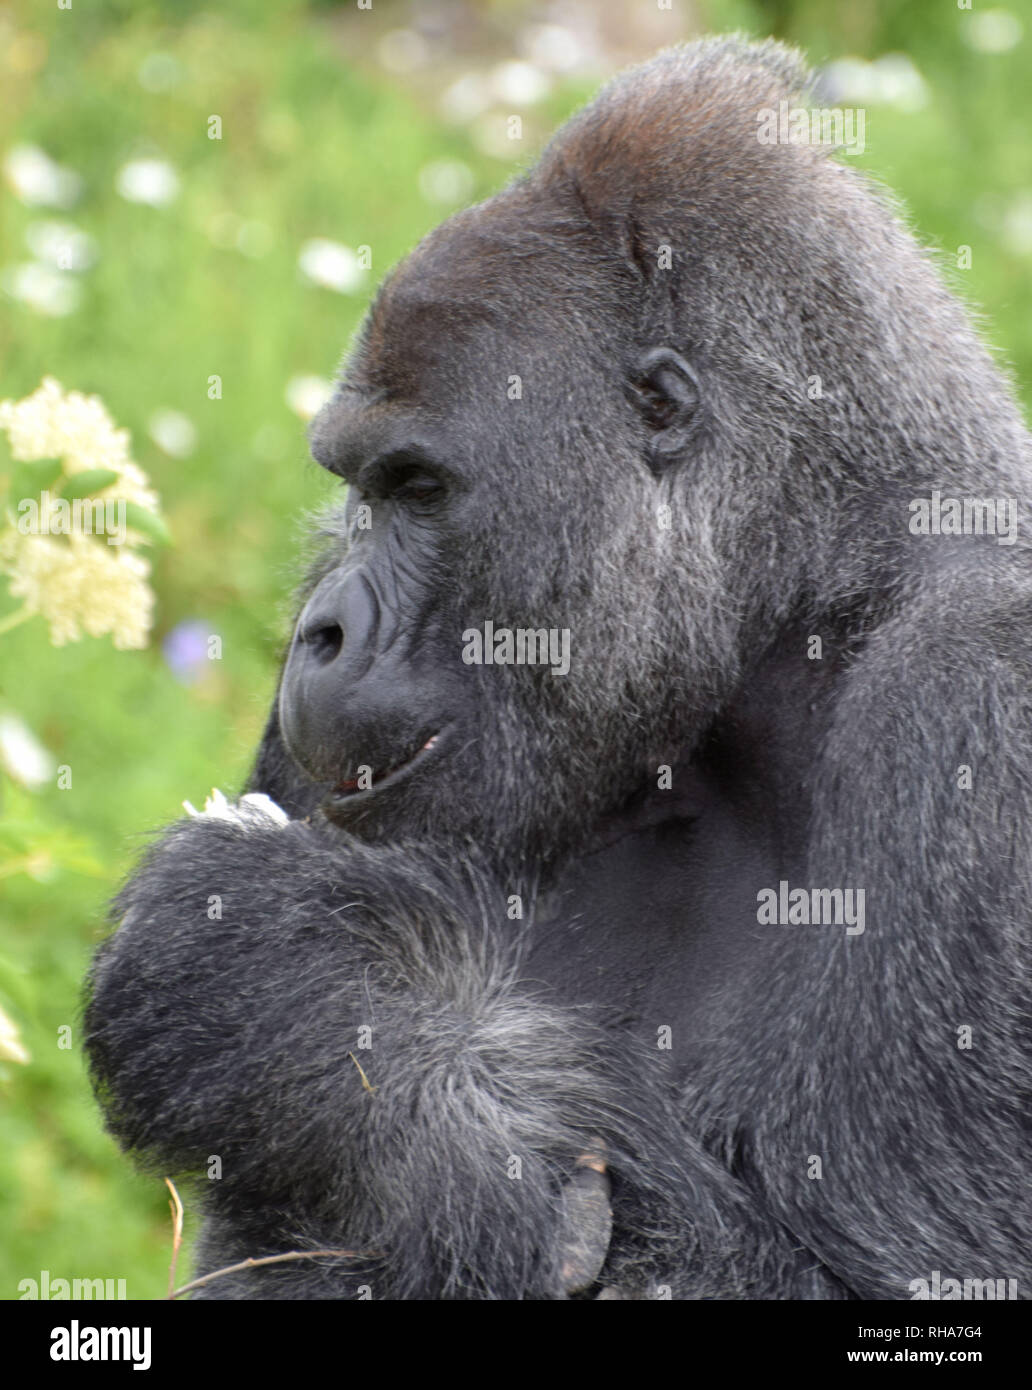 Maschio maturo pianura gorilla Foto Stock